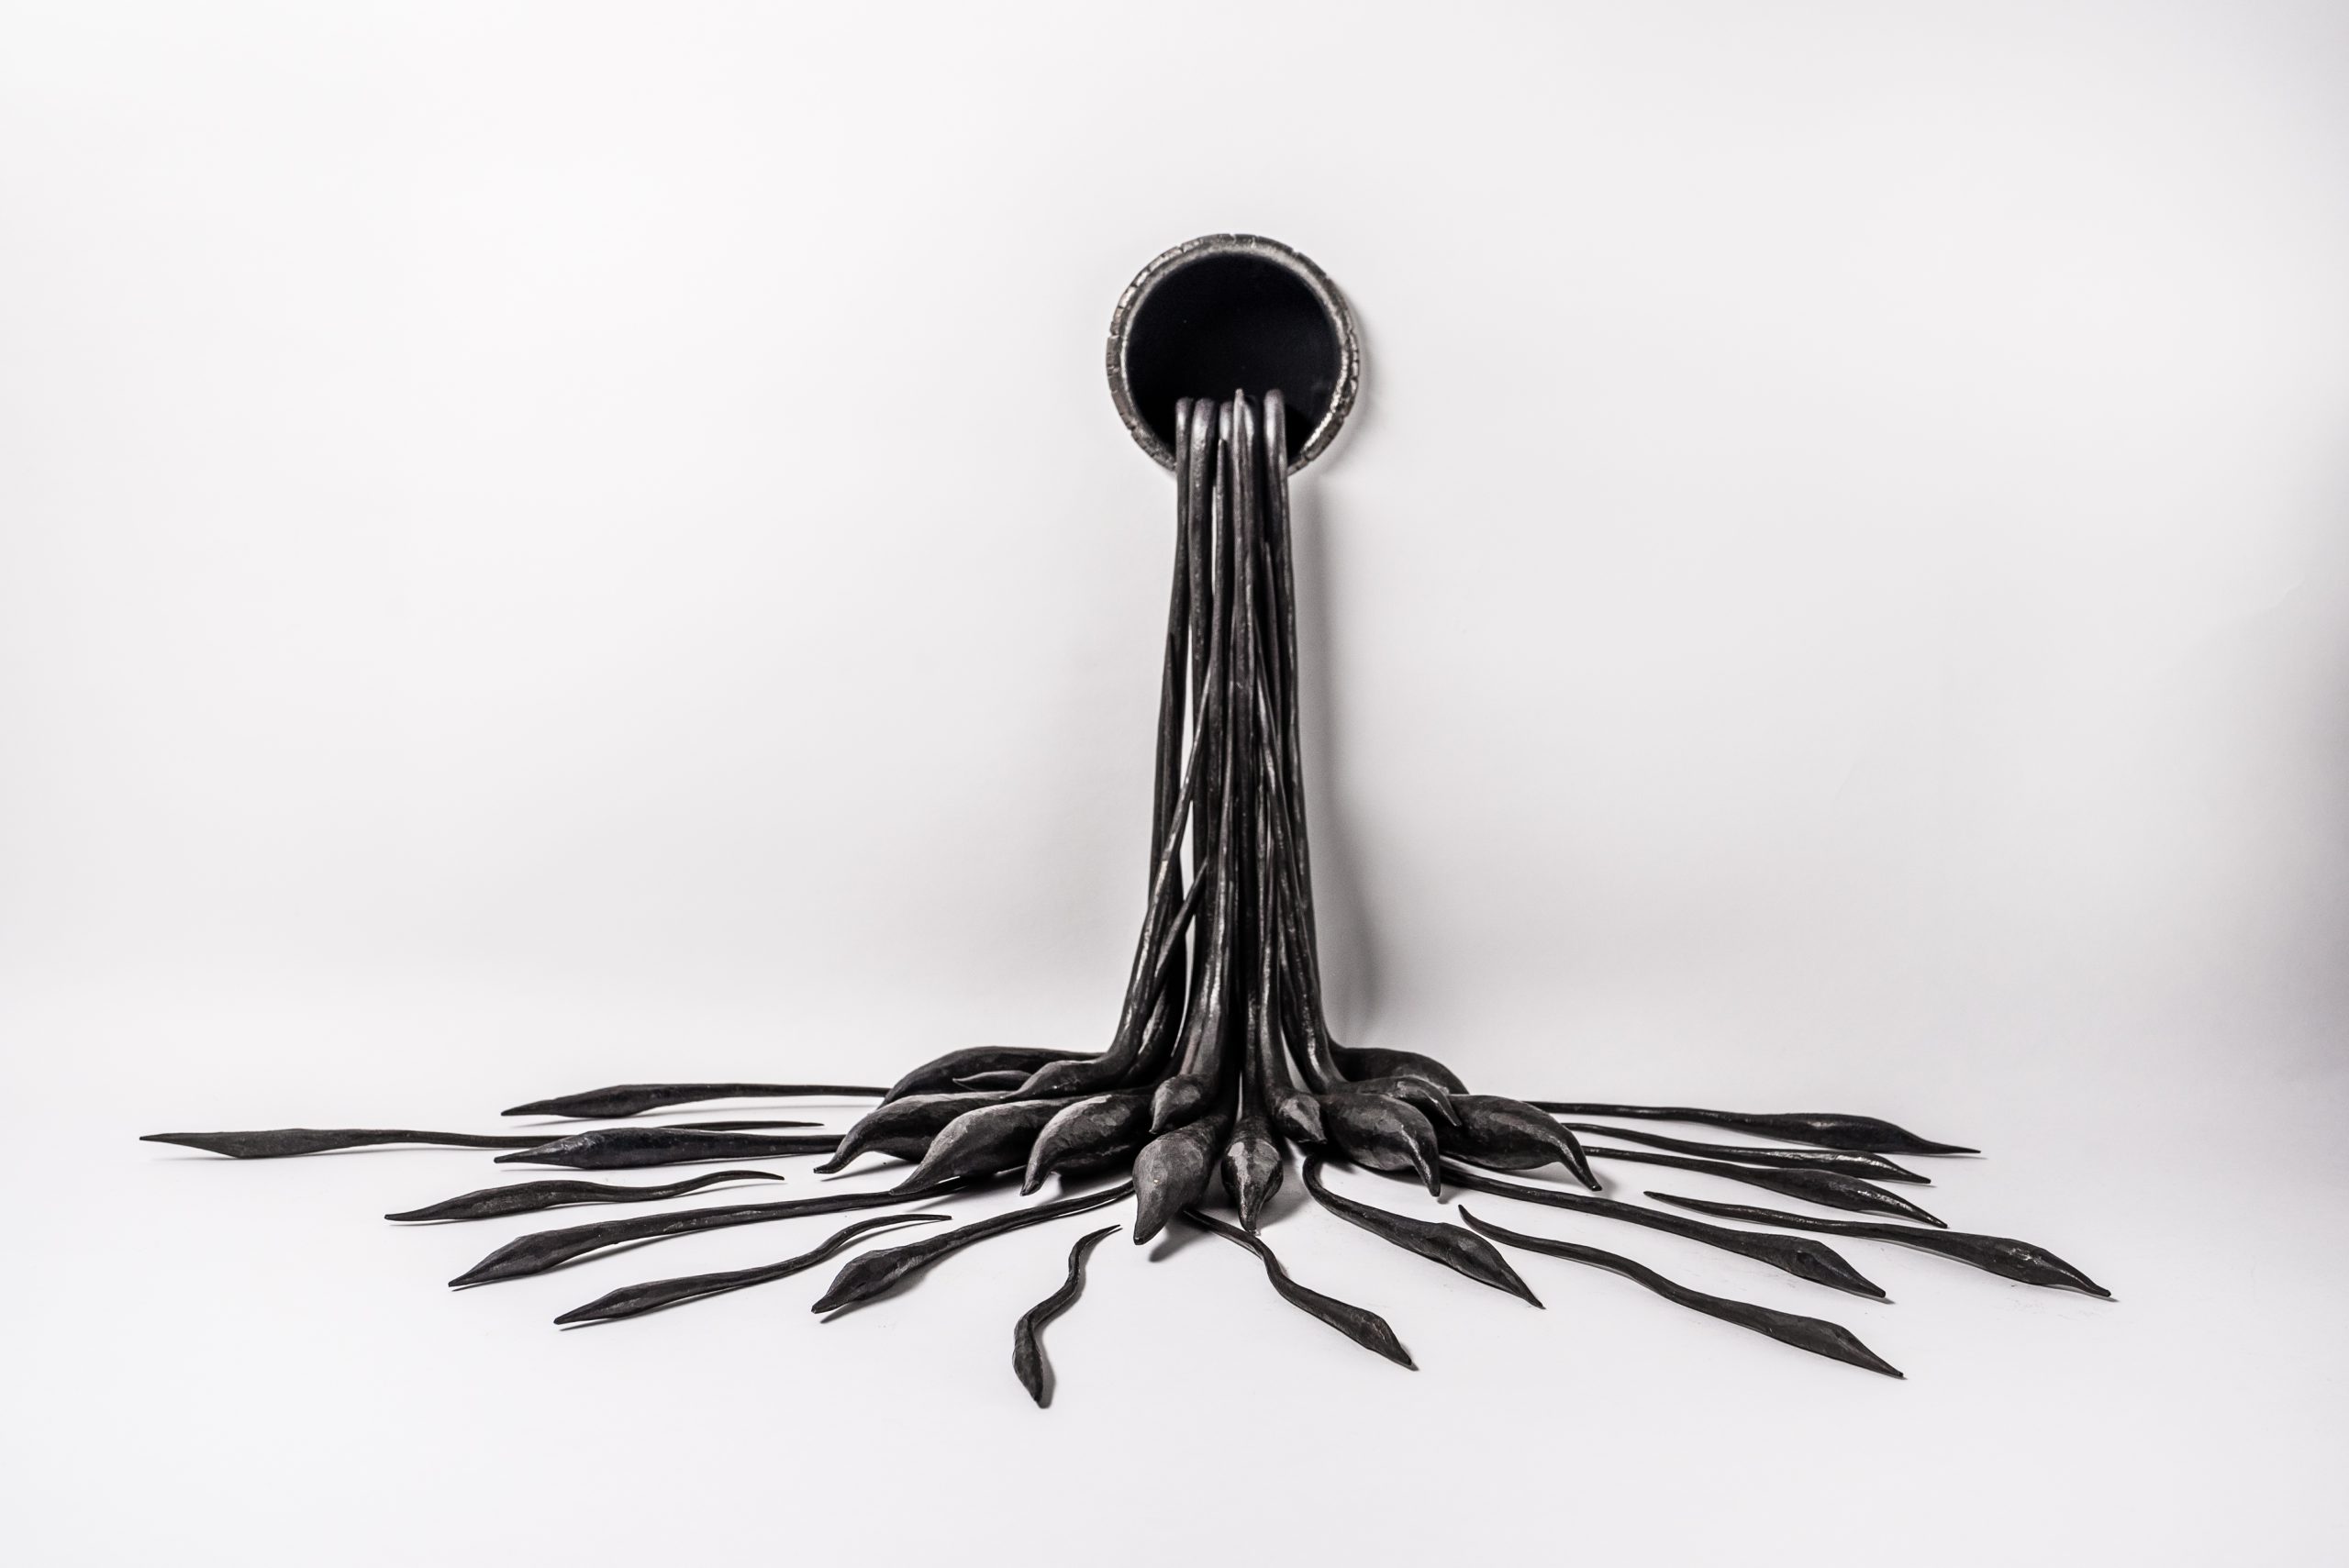 Milwaukee blacksmith Ryan Send presents “Tension” at the Villa Terrace Art Museum